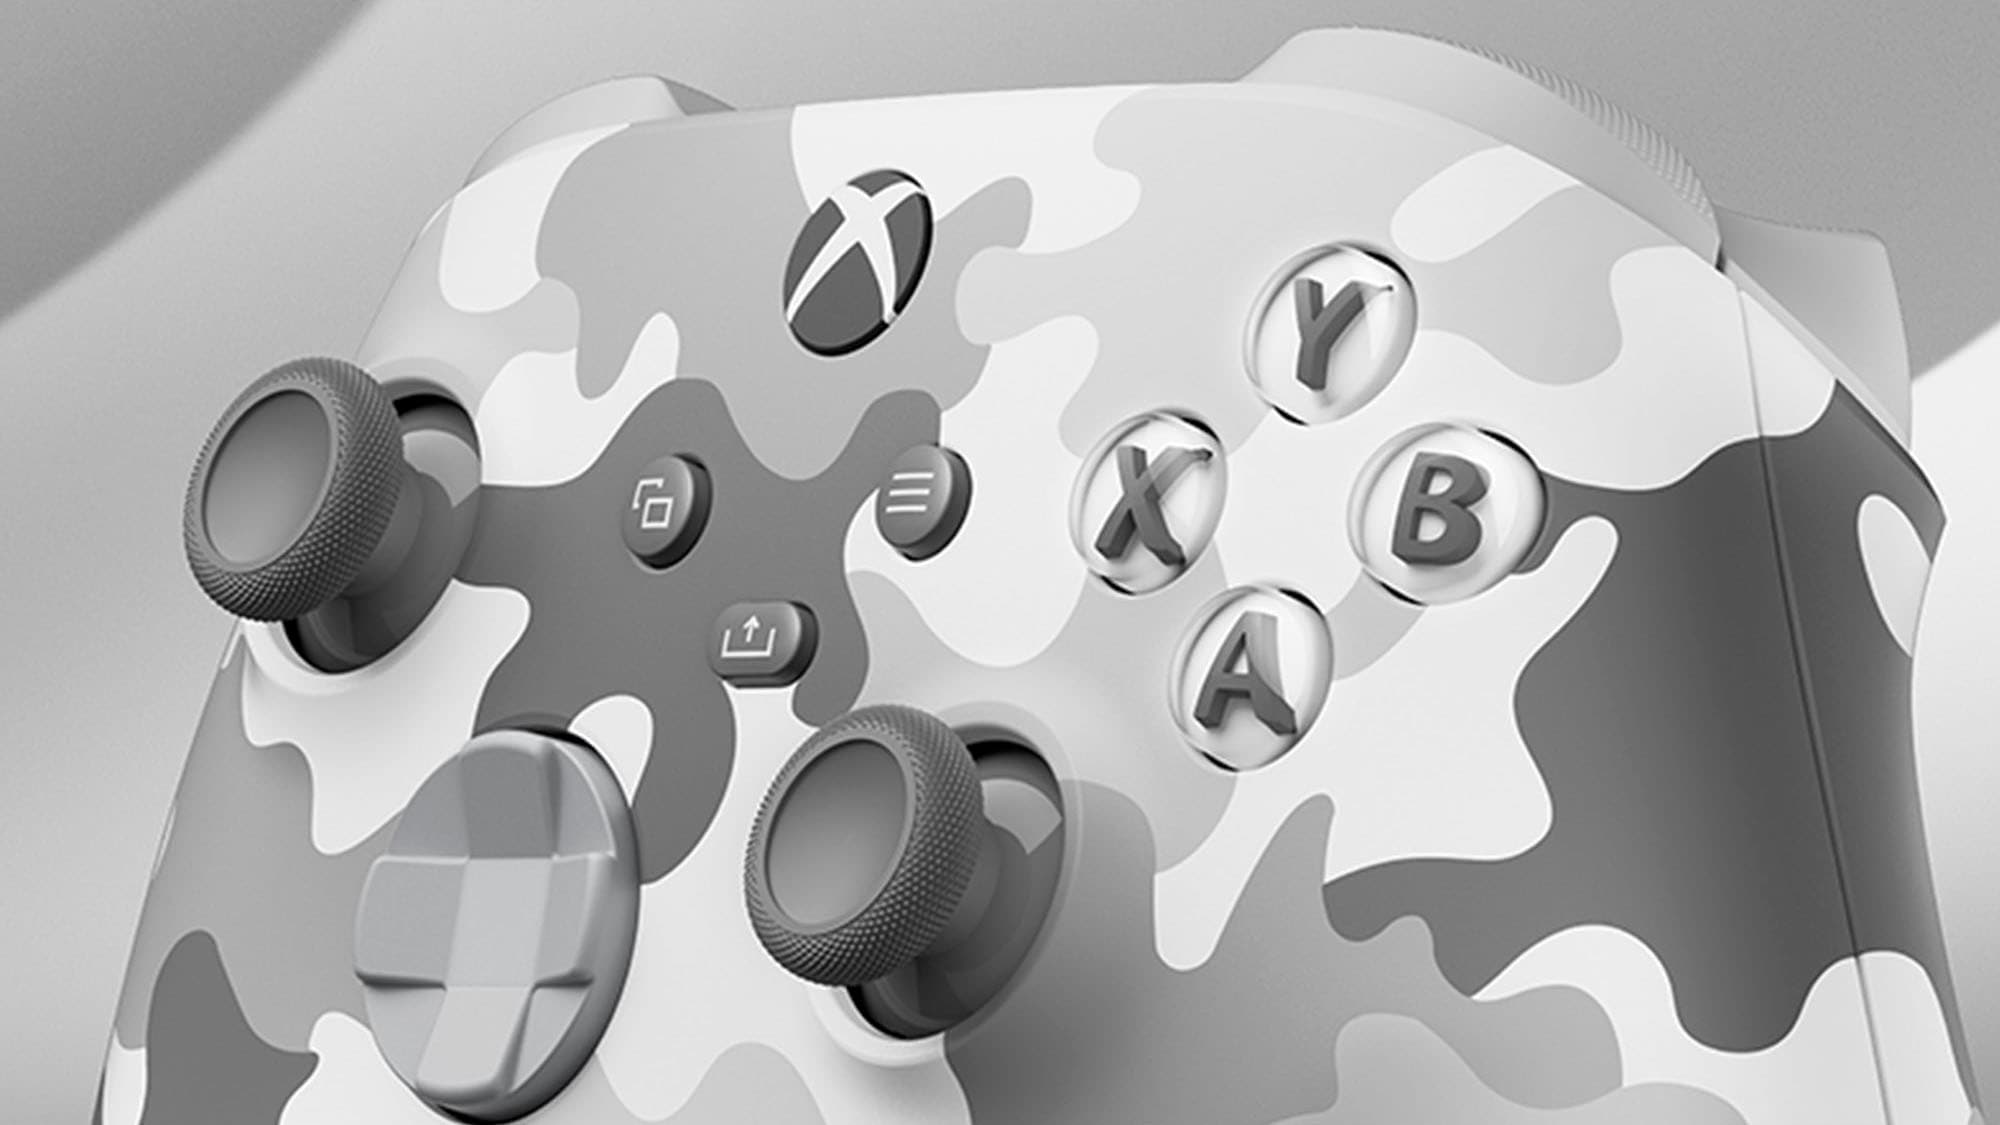 Xbox Wireless-Controller »Arctic Camo Special Edition«